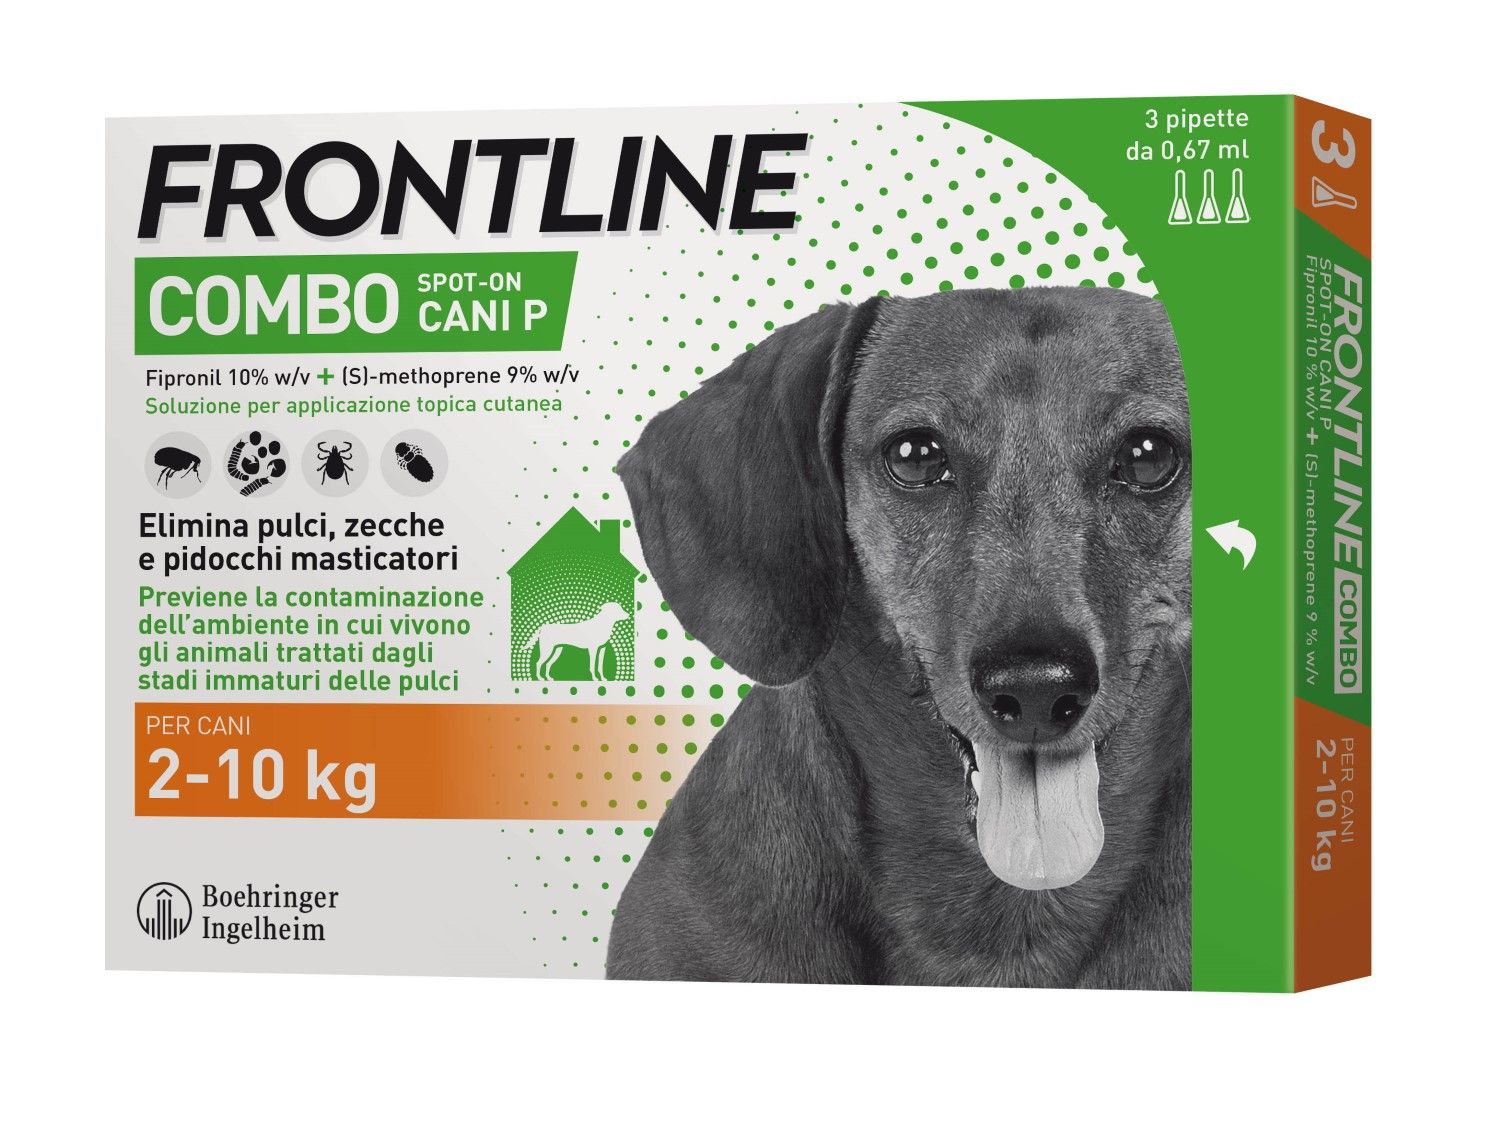 Frontline Combo Cani 3 Pipette 0.67